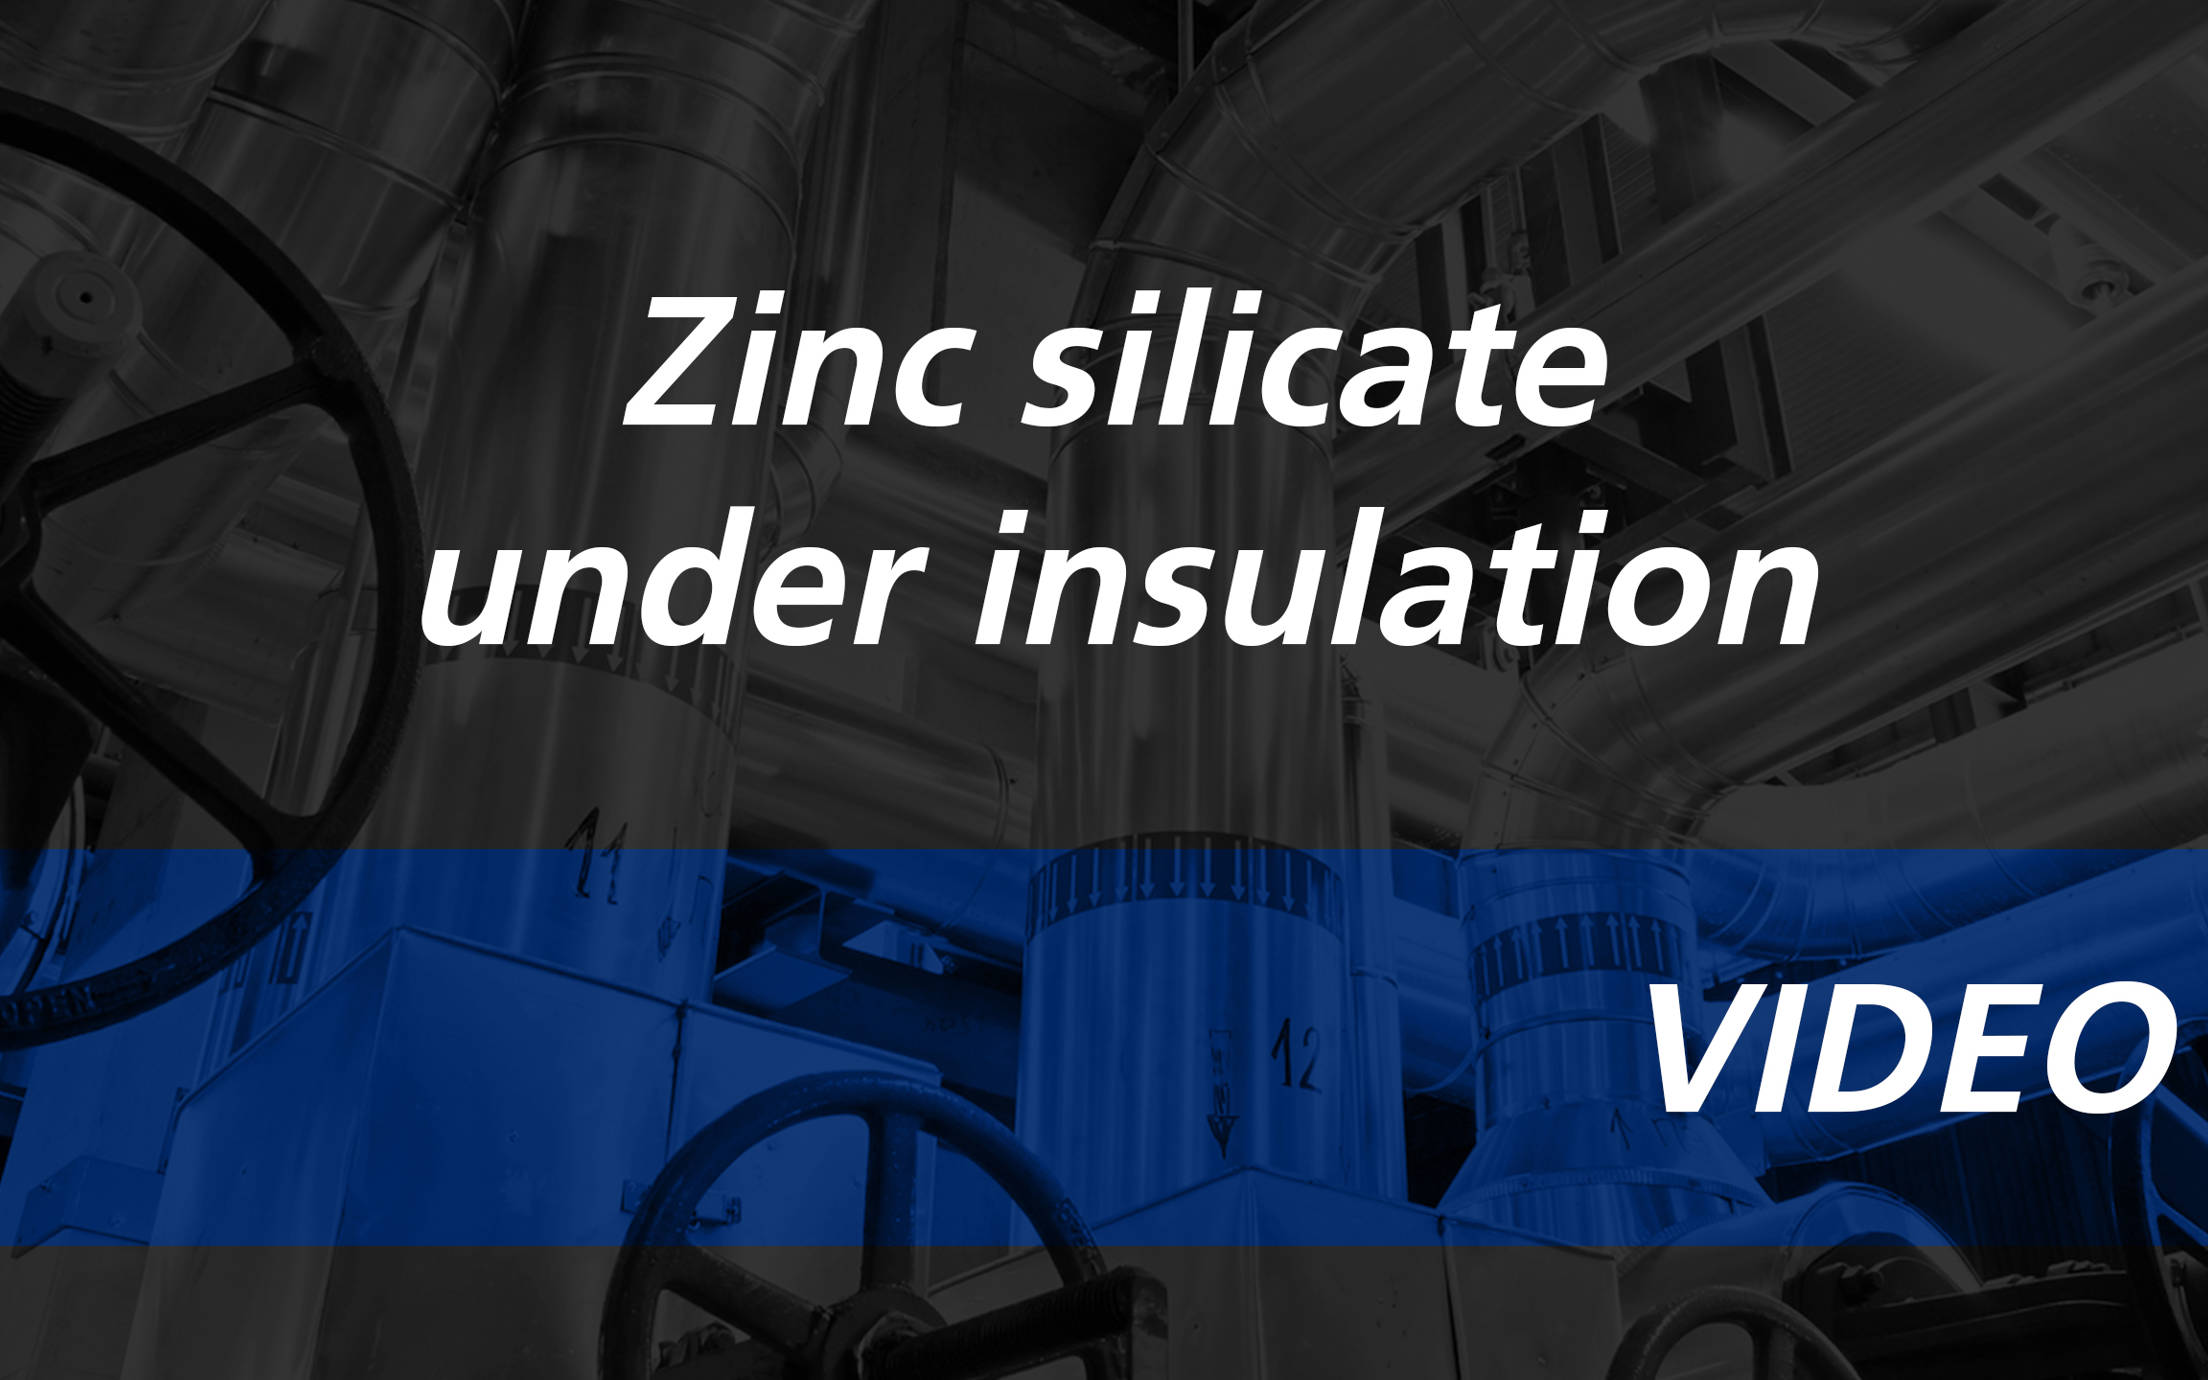 Zinc silicate under insulation video thumbnail